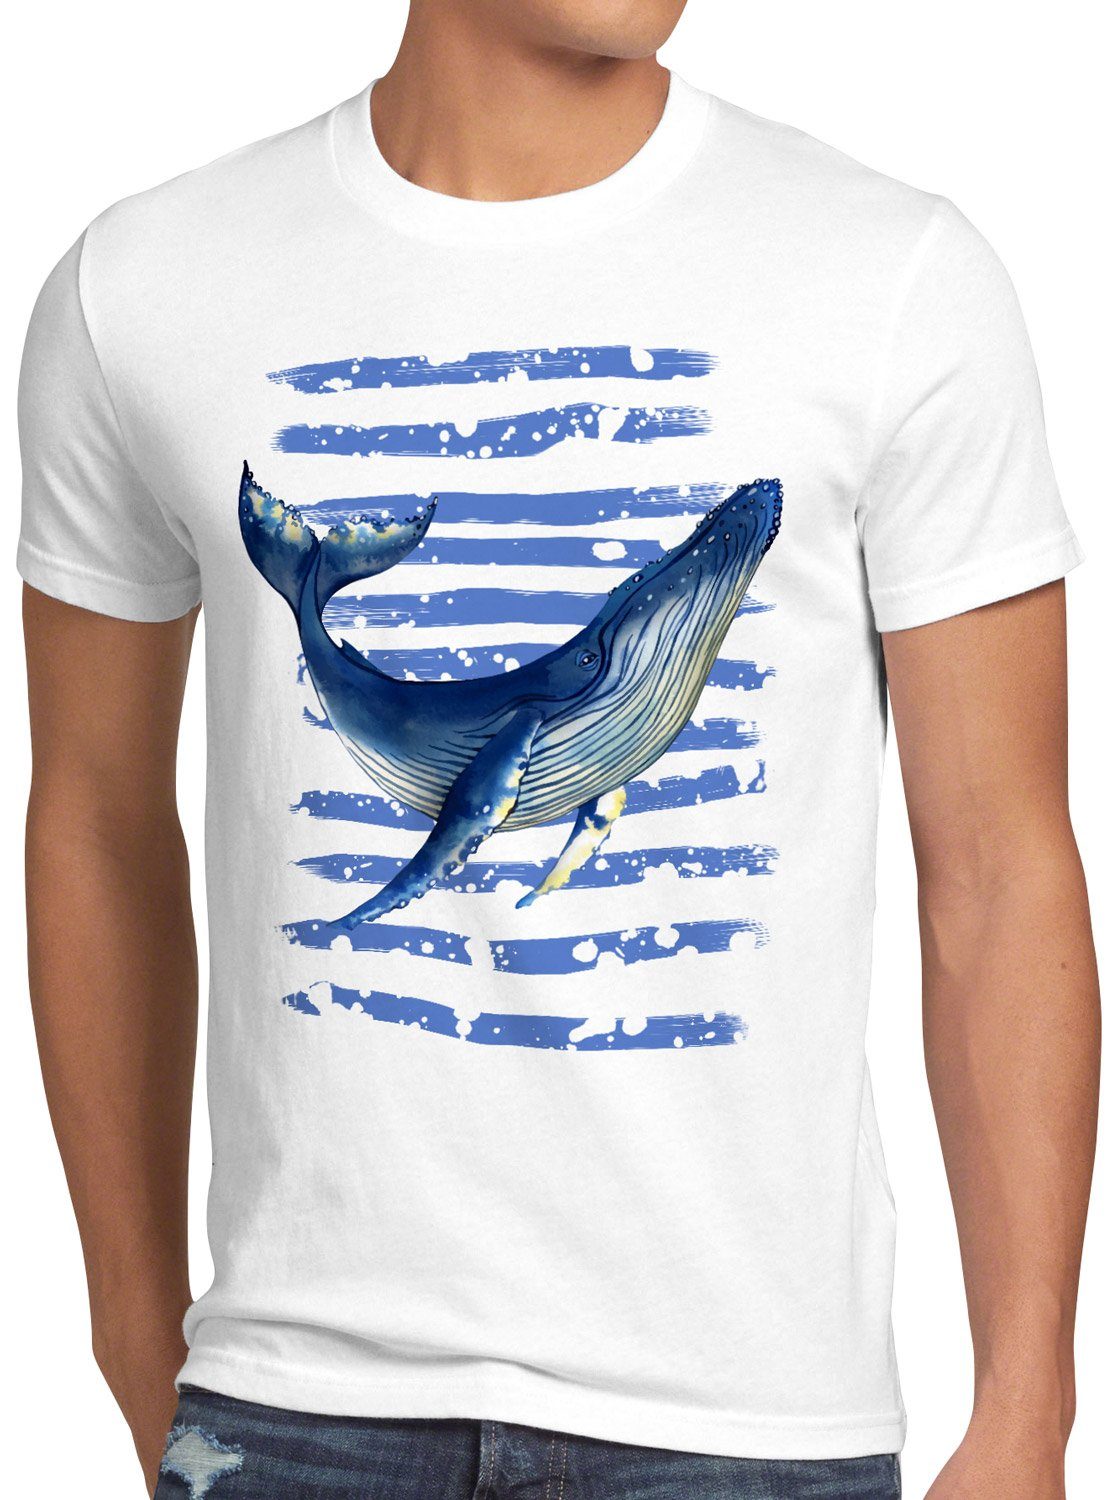 style3 Print-Shirt Herren T-Shirt Blauwal meer ozean tauchen